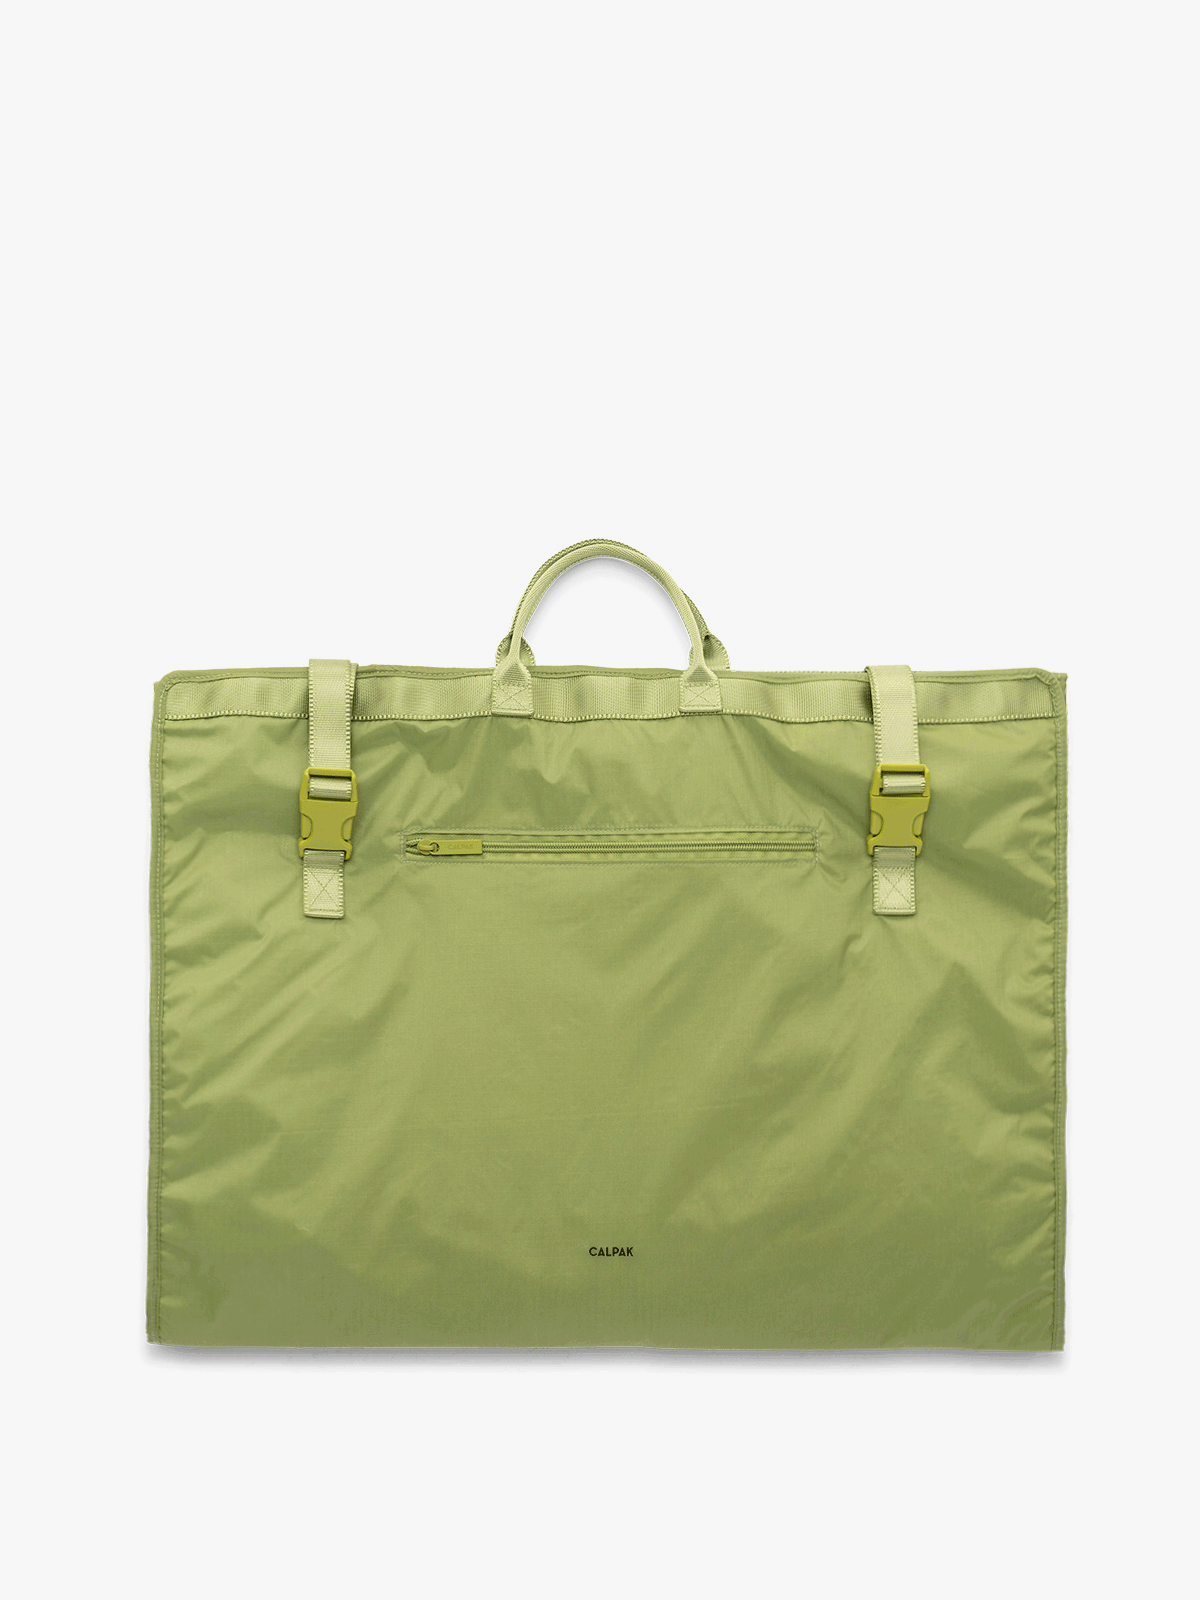 CALPAK Compakt large foldable garment bag in palm